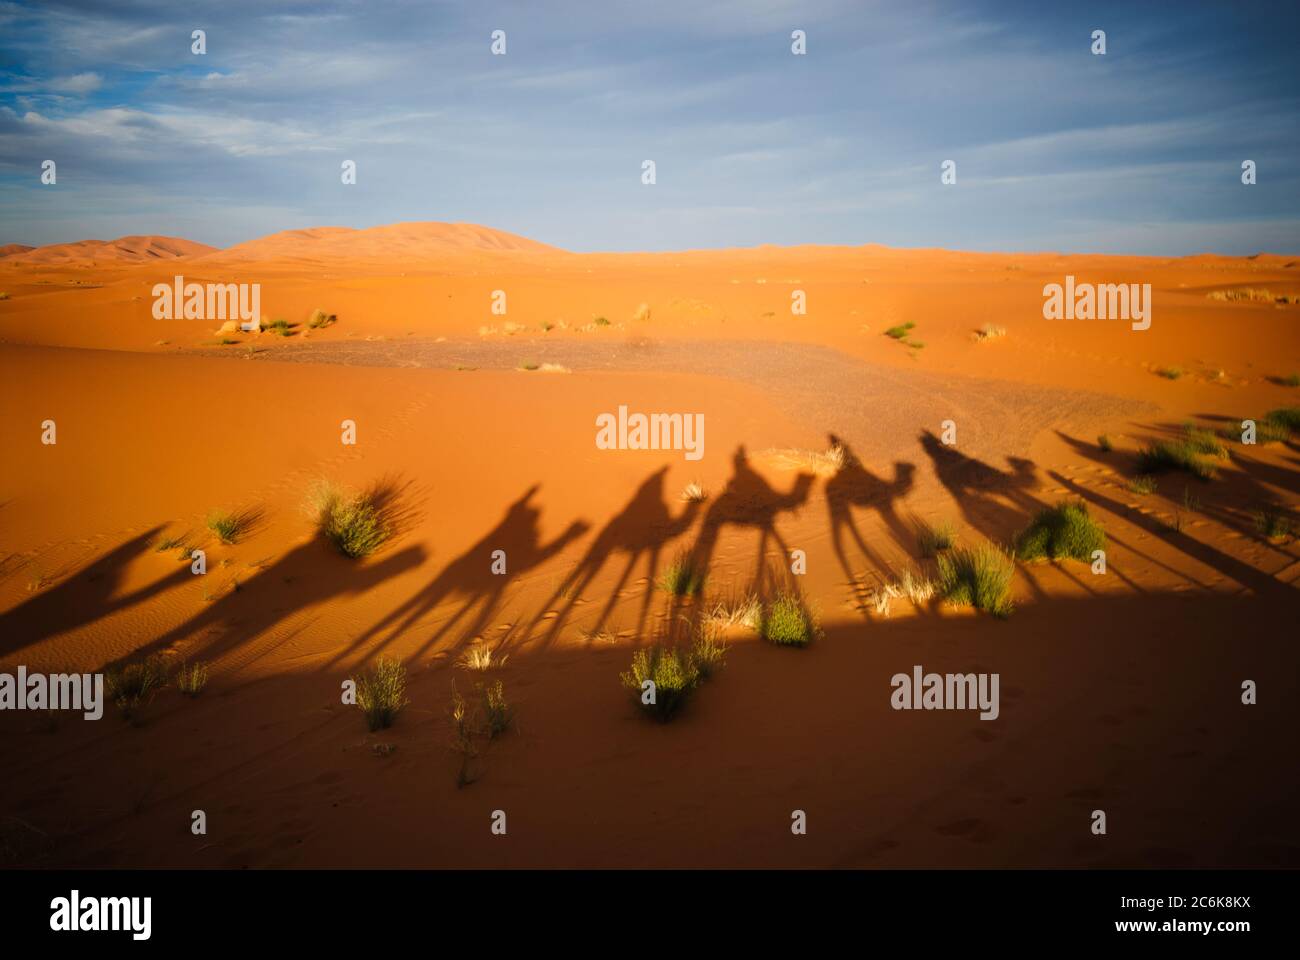 Shadows of camel riders in the desert at sunset, Sahara Desert, Morocco Stock Photo